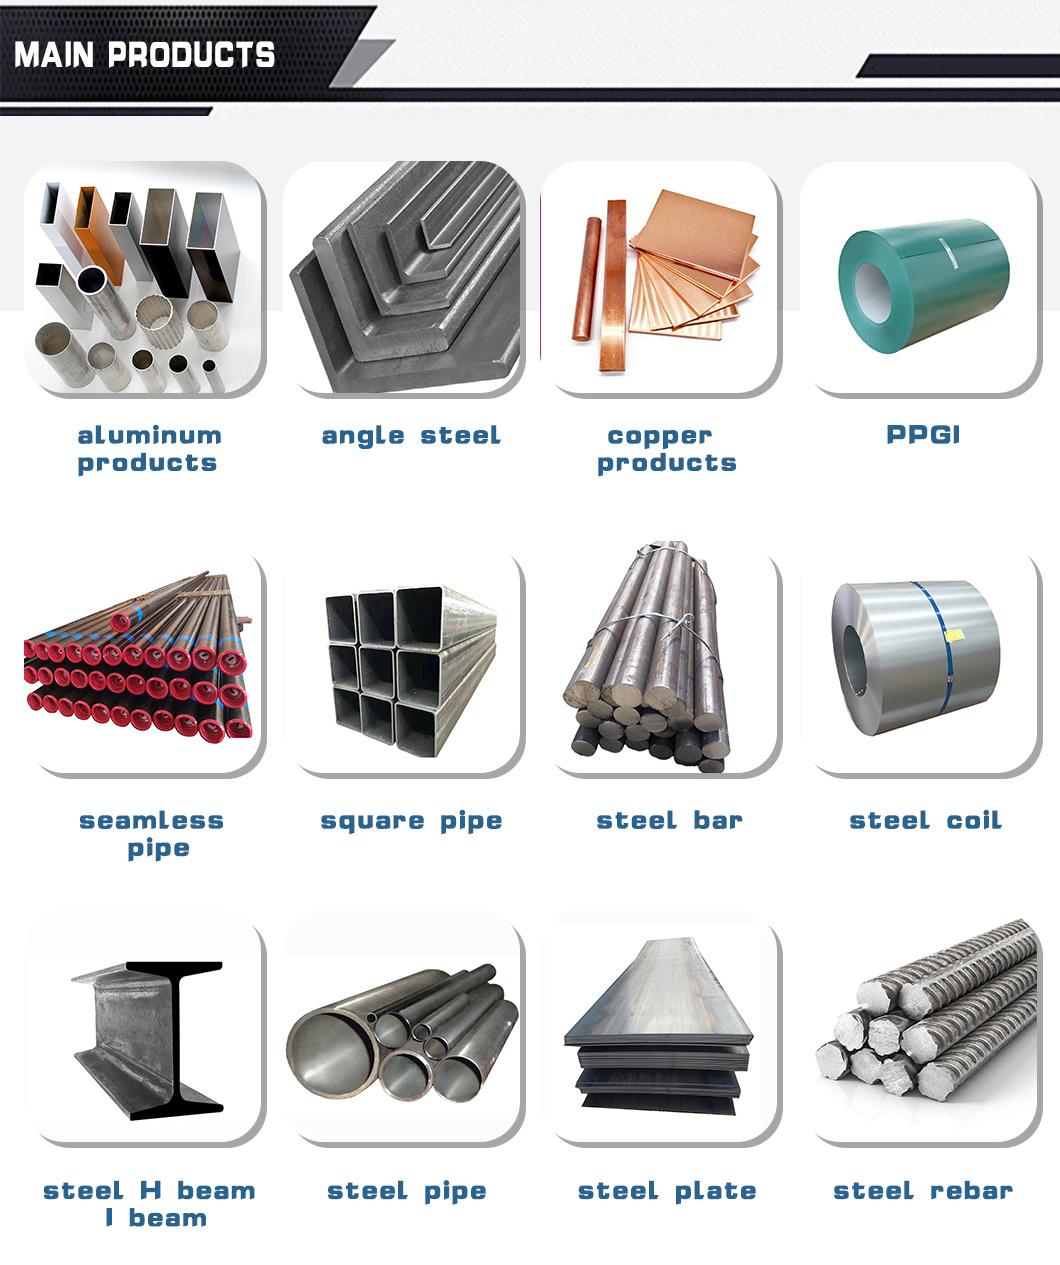 Custom ASTM 321 Metal Rod 6mm Hexagonal/Flat/Rectangular/Round Stainless Steel/Aluminum/Carbon/Galvanized Rod Bar